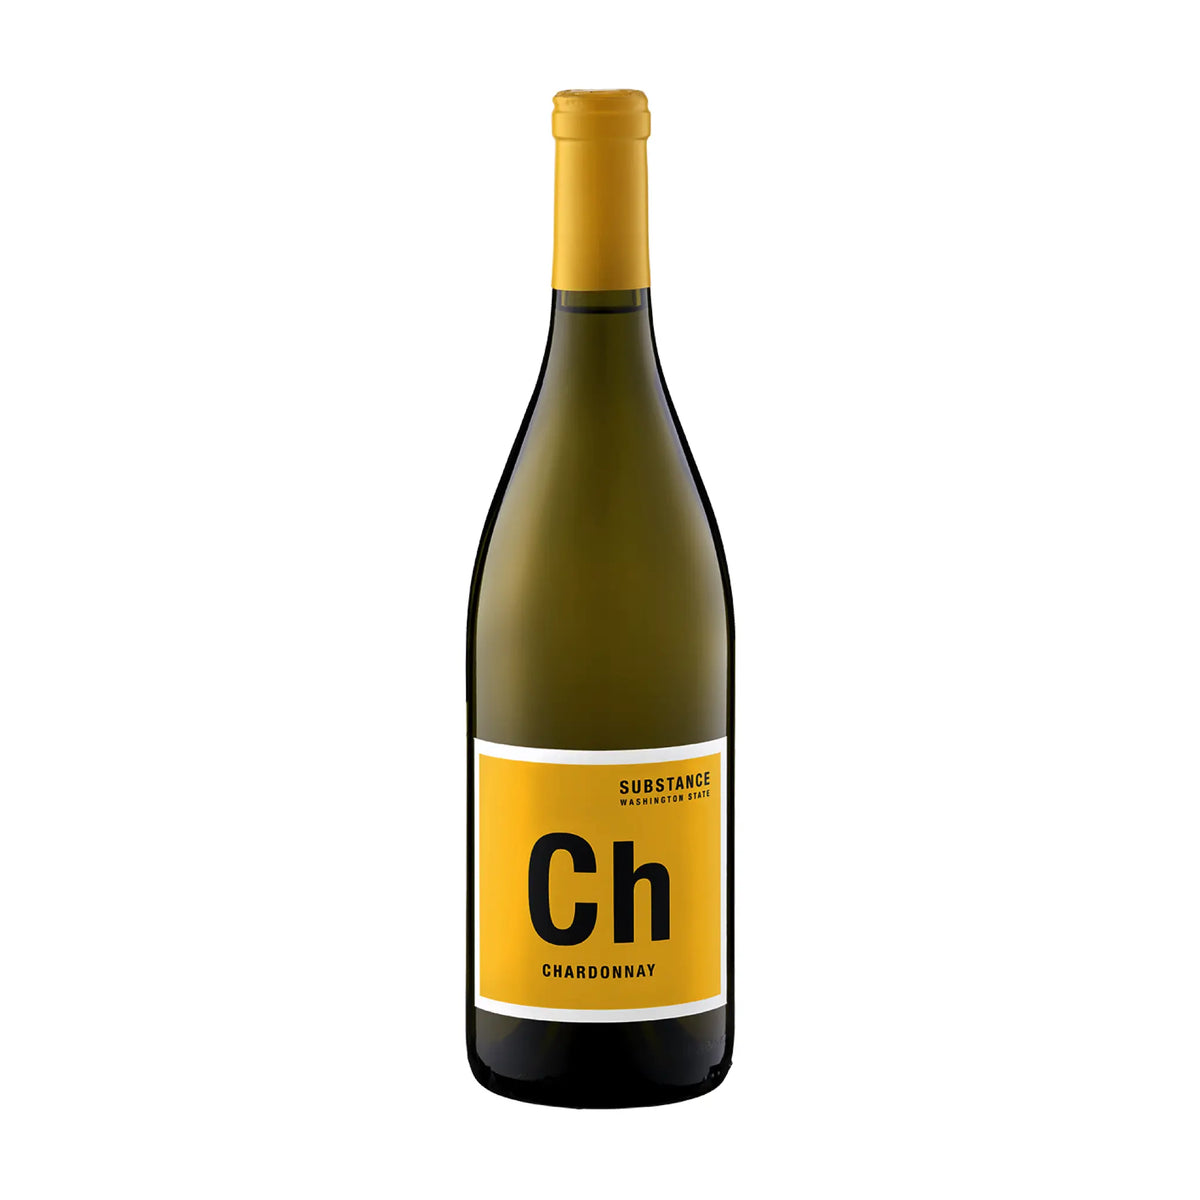 Wines of substance-Weißwein-Chardonnay-USA-Washington-2019 Substance 'Ch' Chardonnay-WINECOM